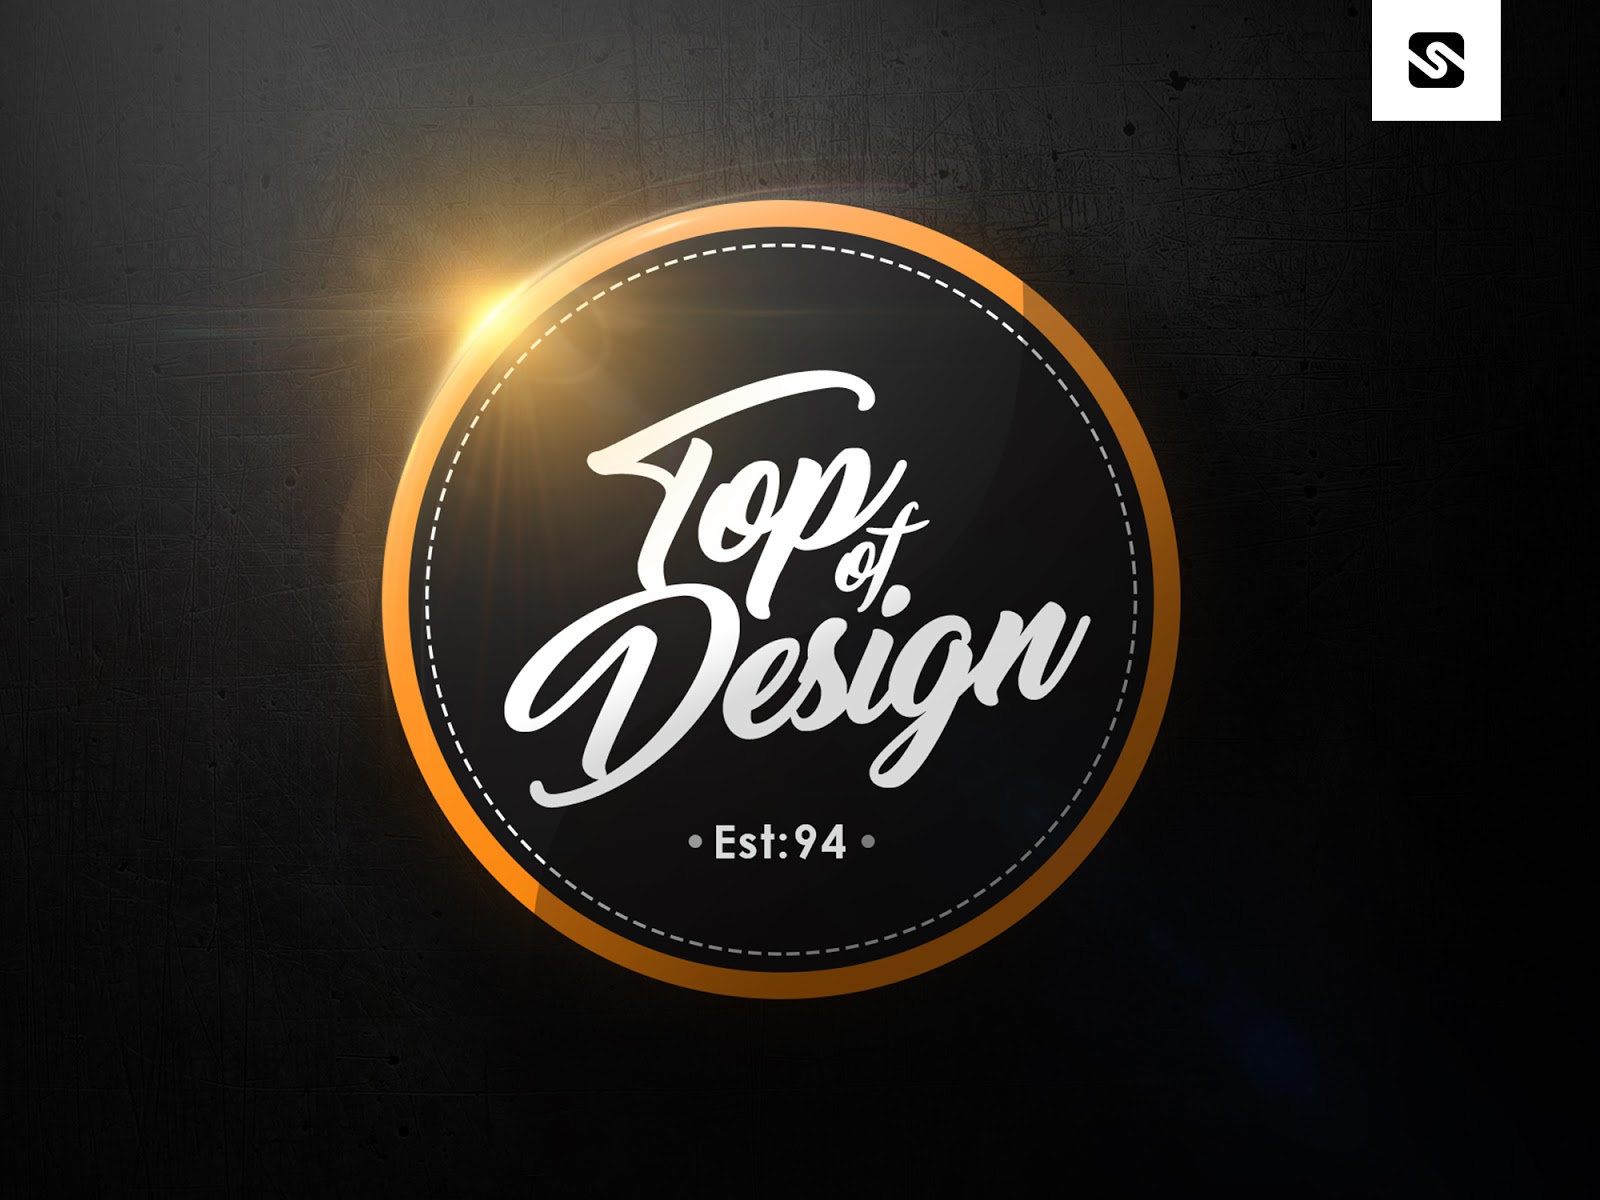 Free Download Modern Badge Logo Design Template. PSD File